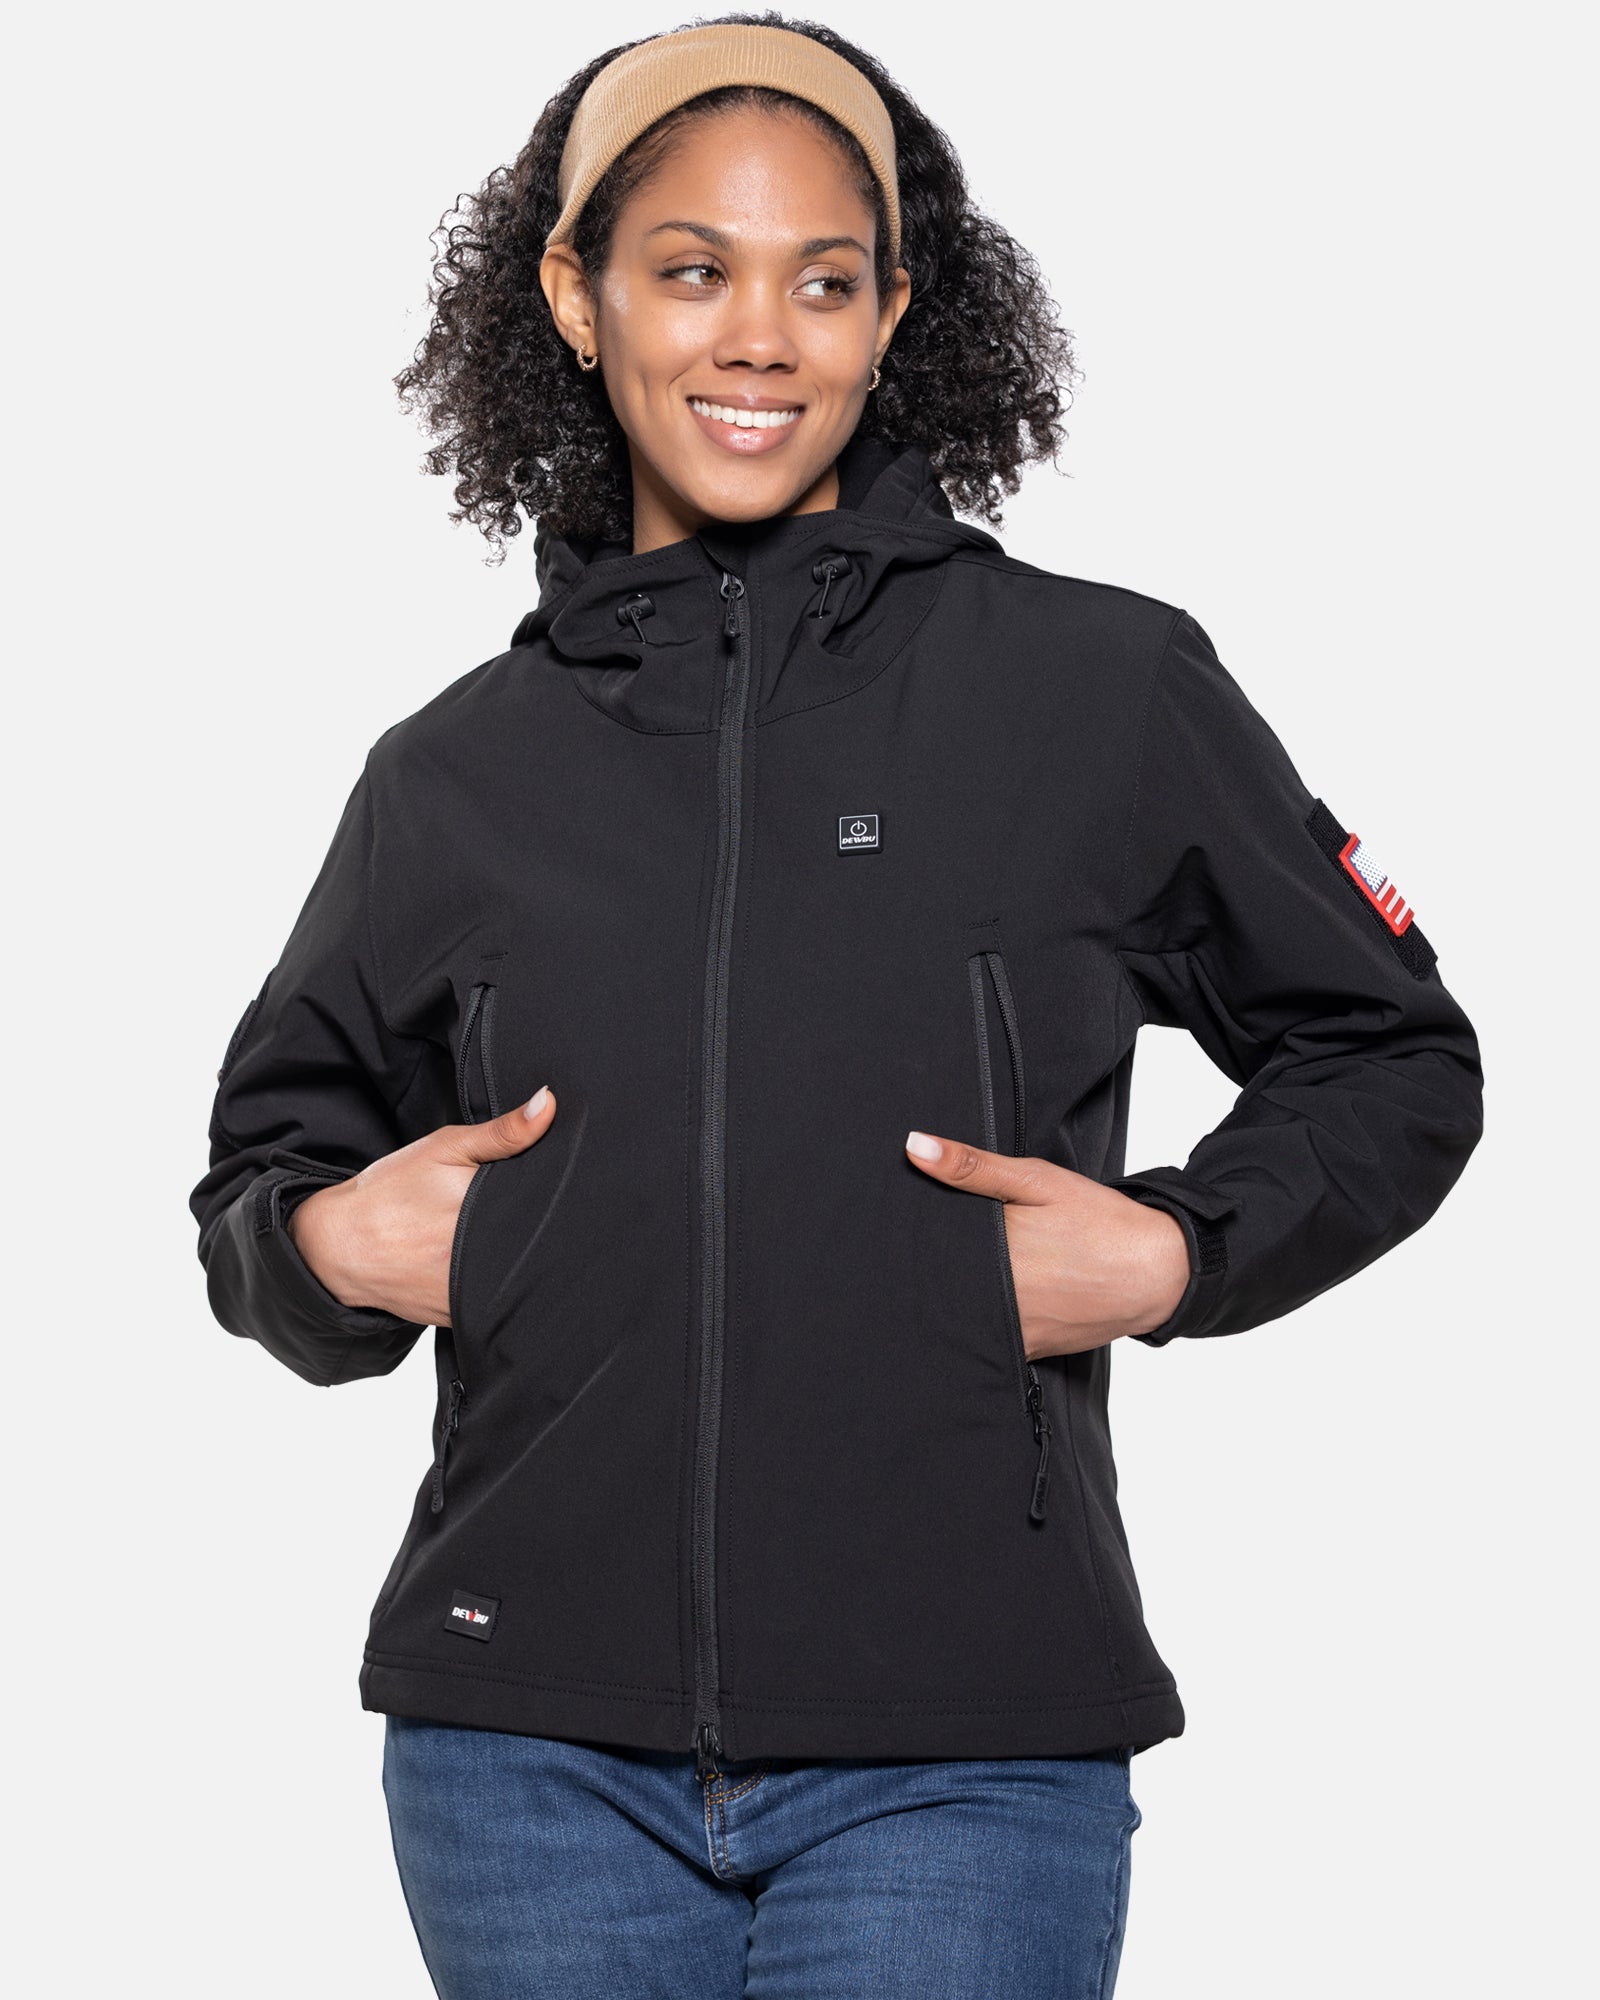 DEWBU® Women\'s Soft Jacket Black 12V Battery Pack Shell With - Heated